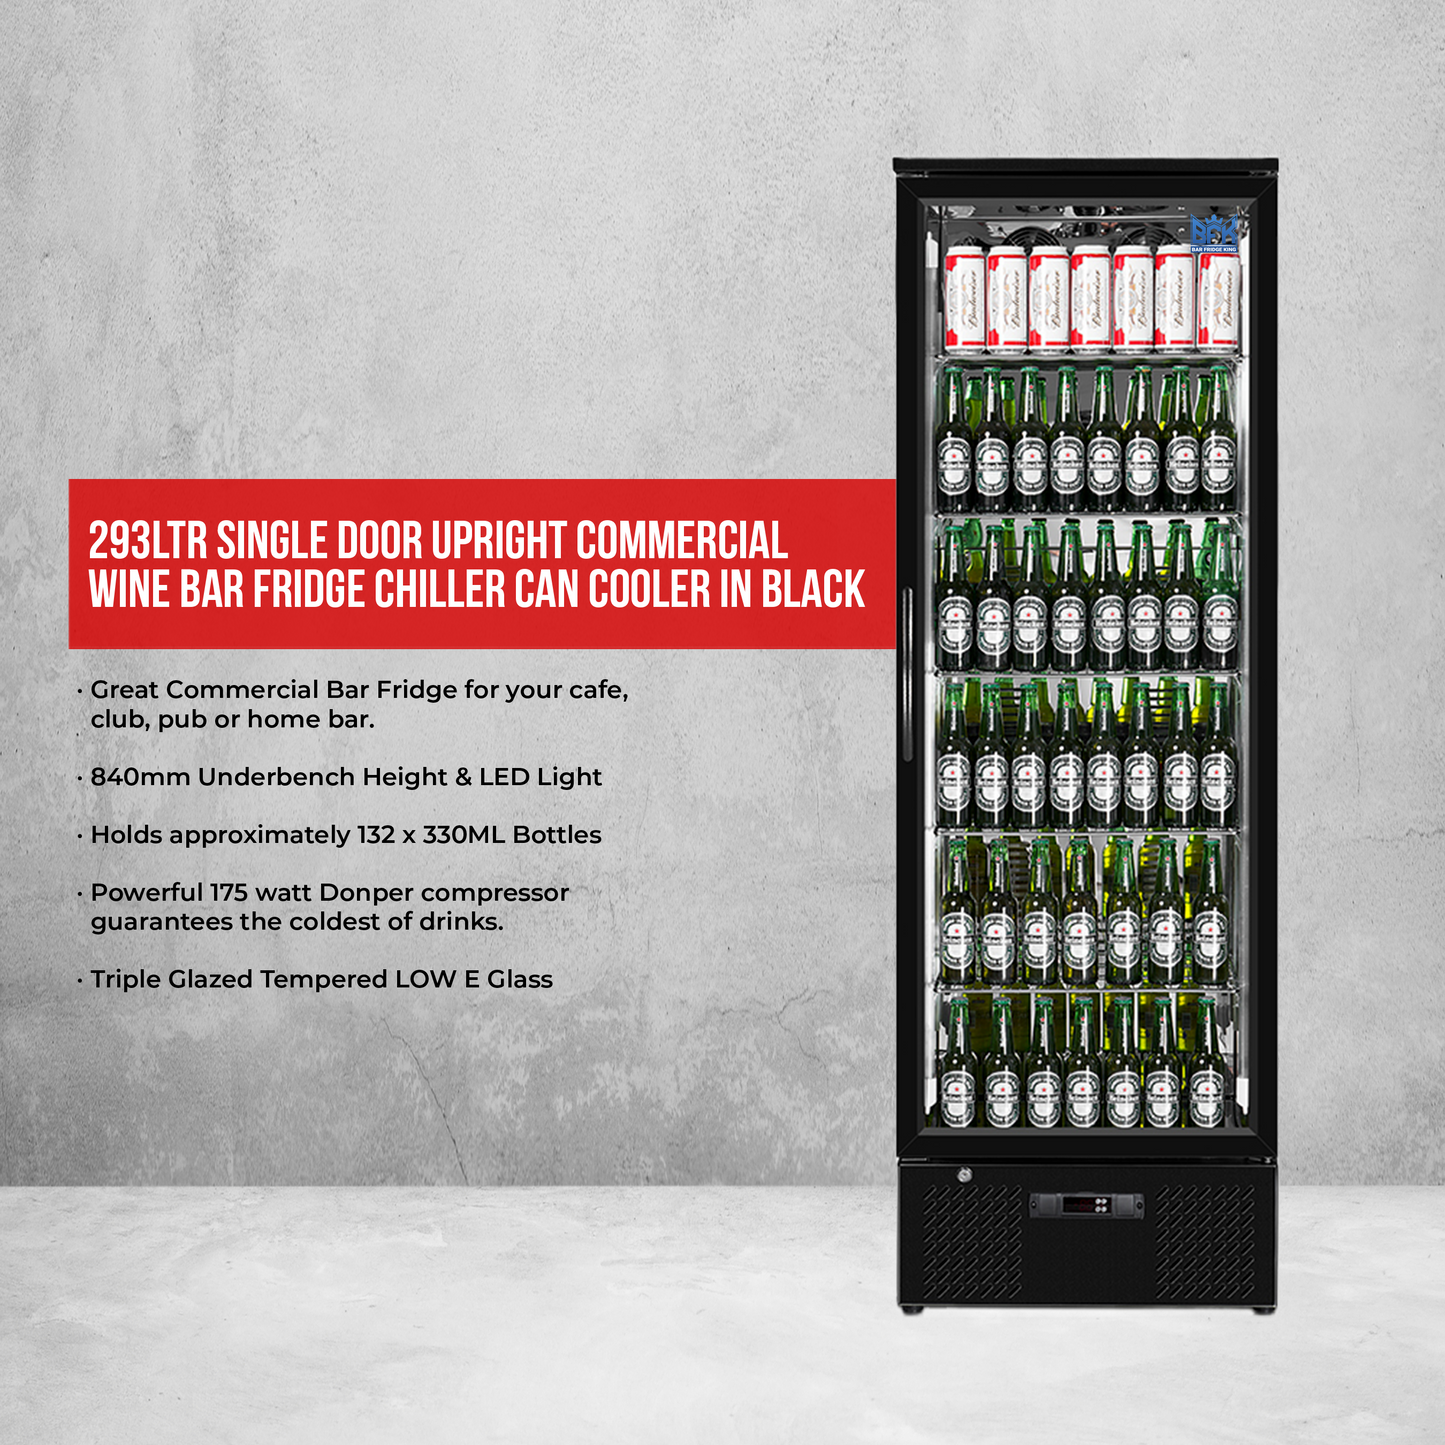 293Ltr Single Door Upright Commercial Wine Bar Fridge Chiller Can Cooler in Black